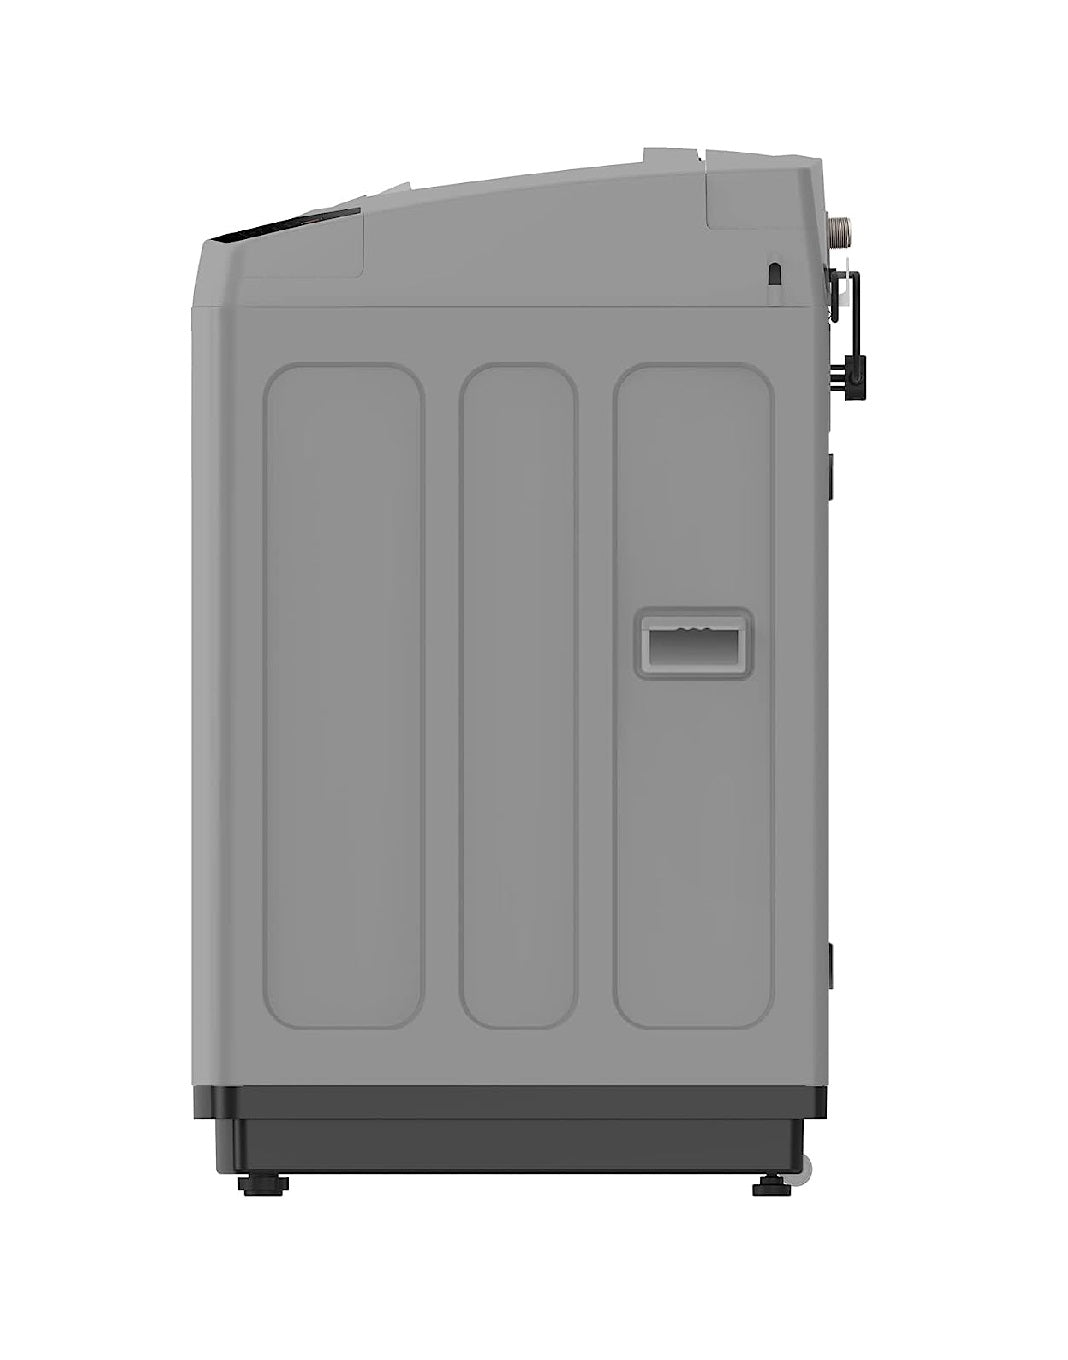 IFB TL-REGS 7.0KG AQUA 7.0 Kg 5 Star Top Load Washing Machine, Medium Grey